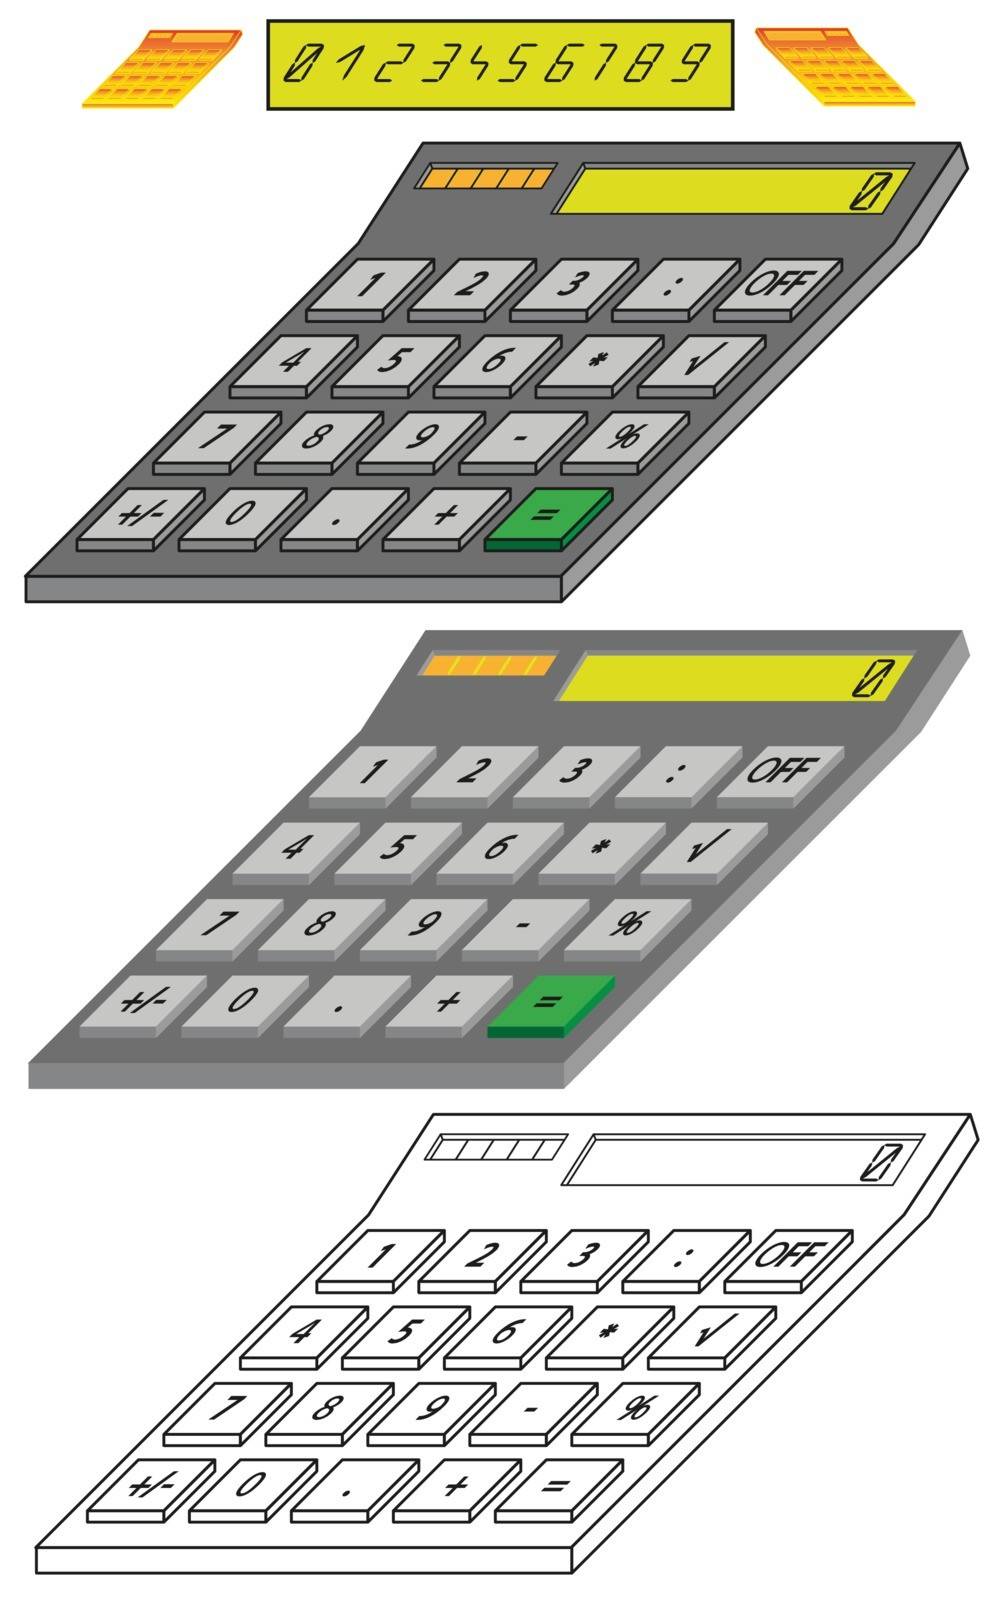 Digital Calculator Model in Isometric View by fstockluk